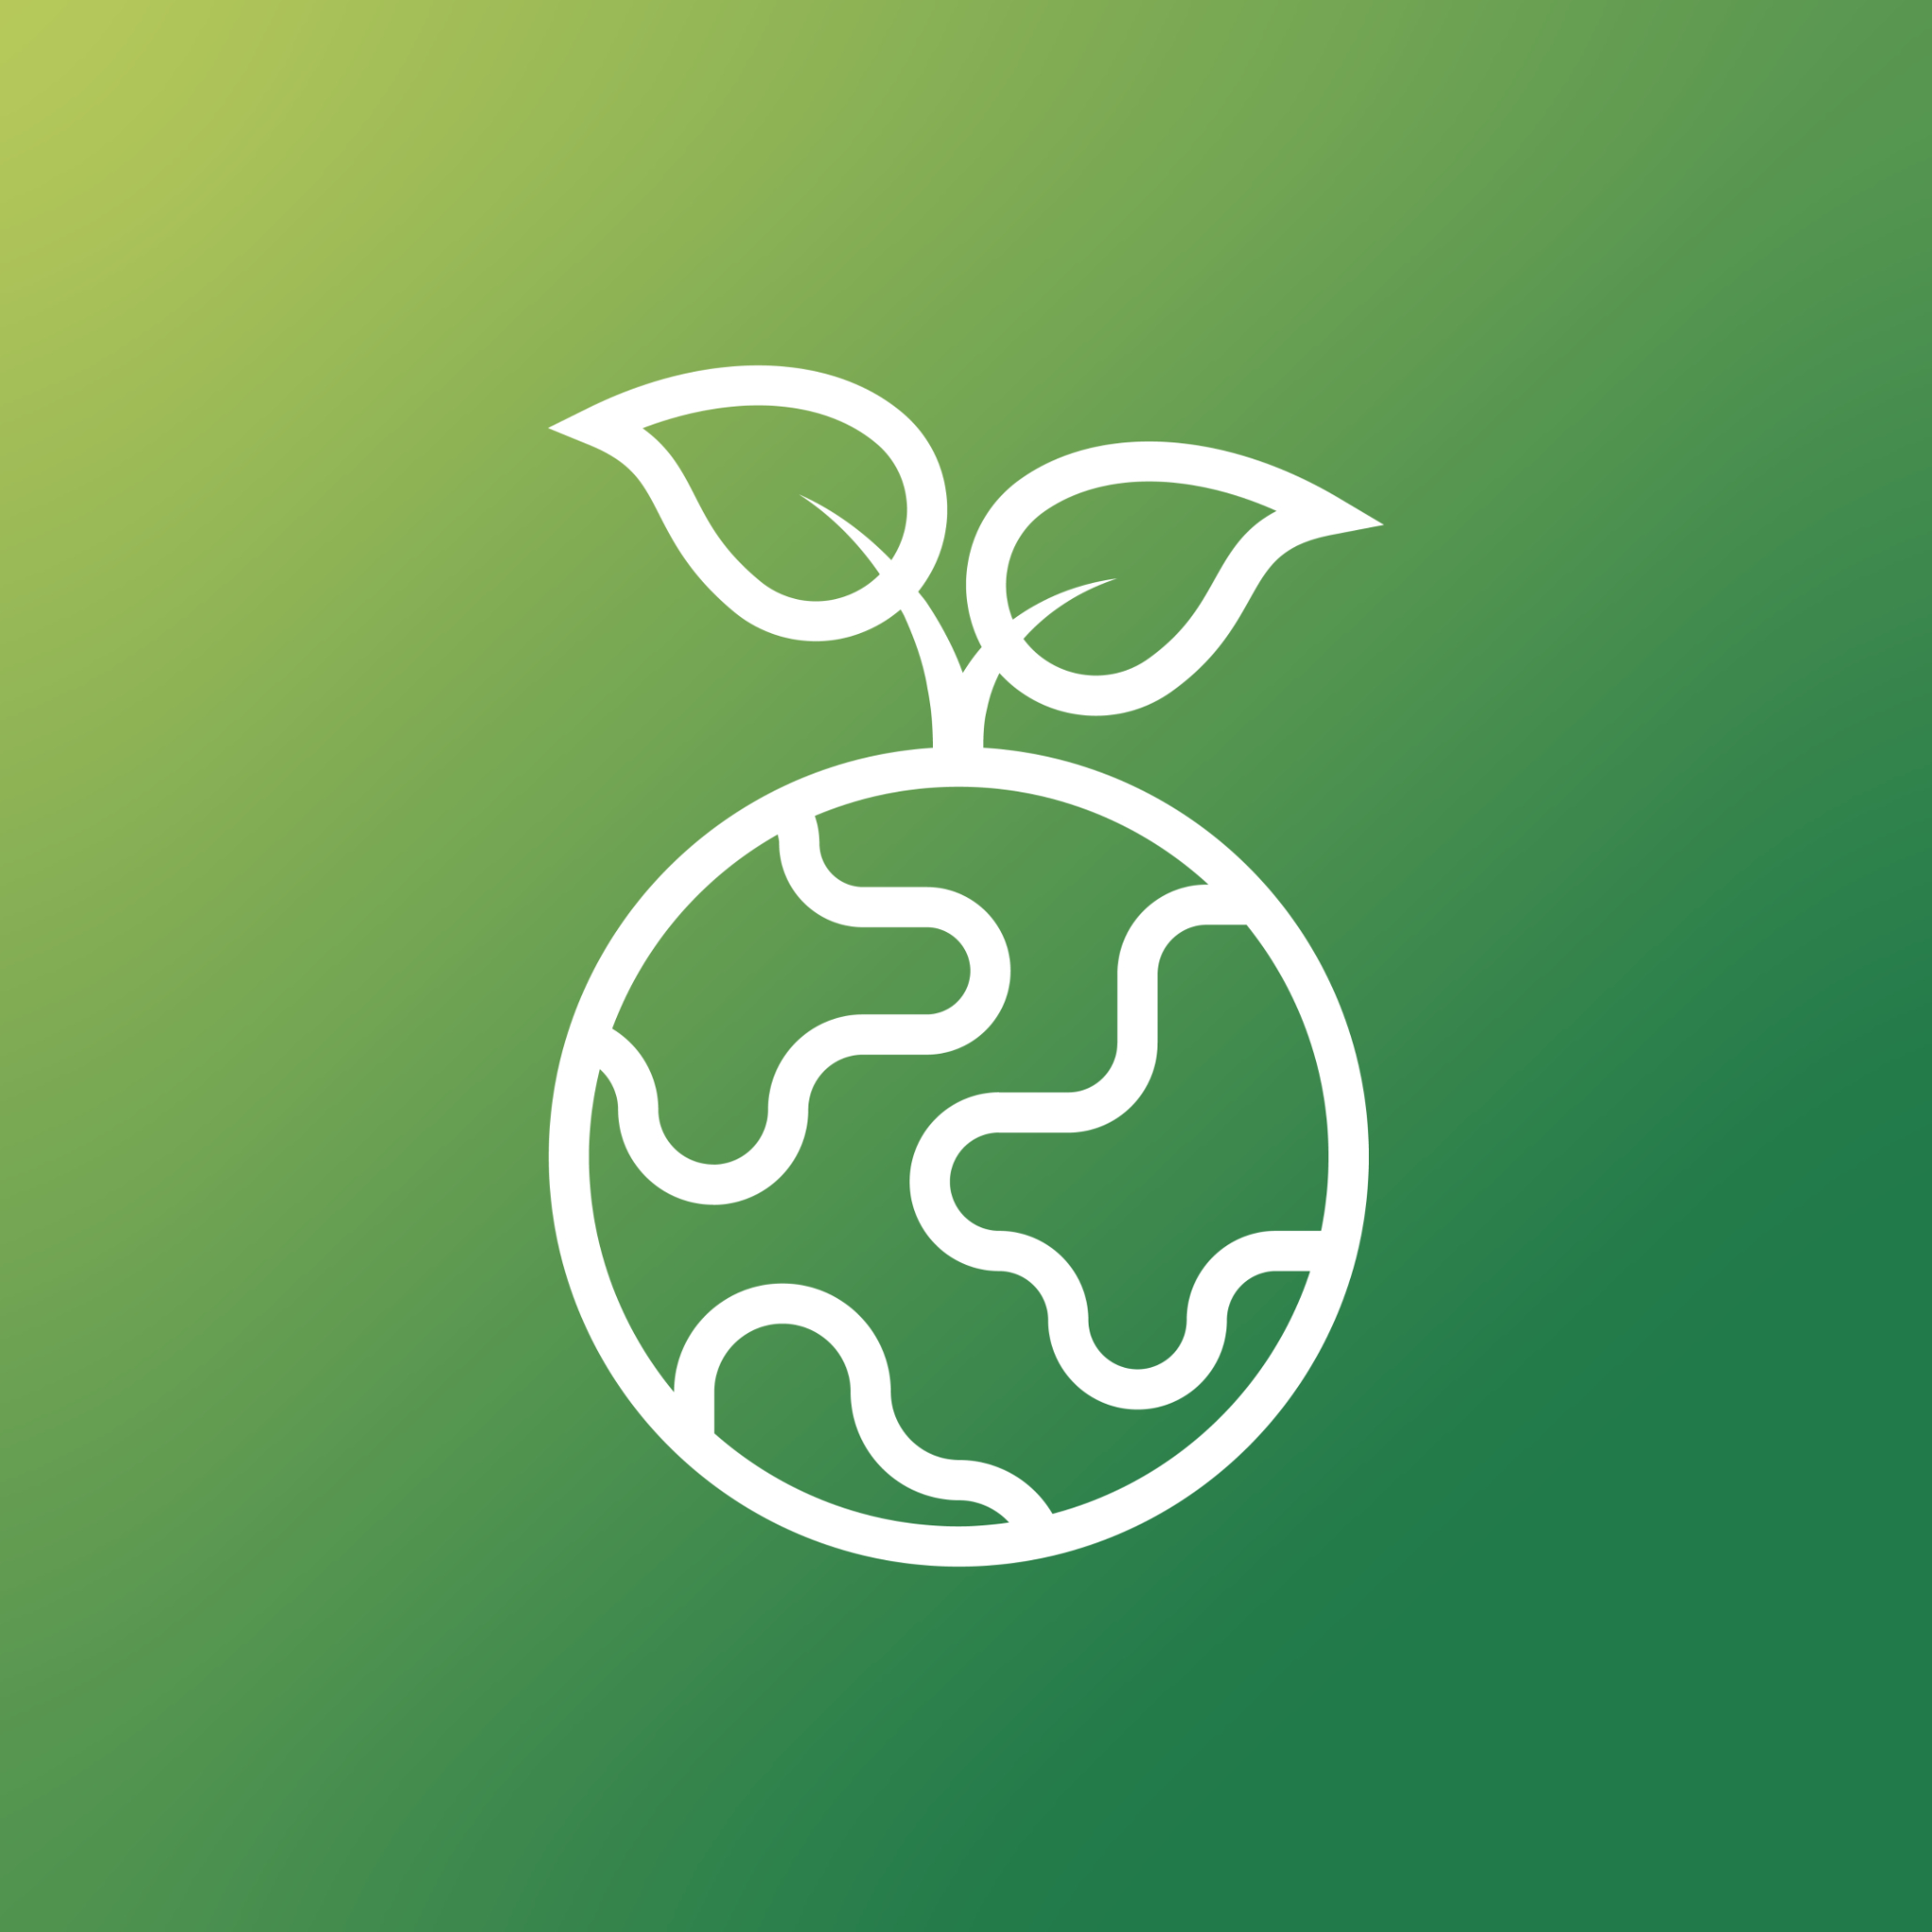 SavePlanetEarth logo